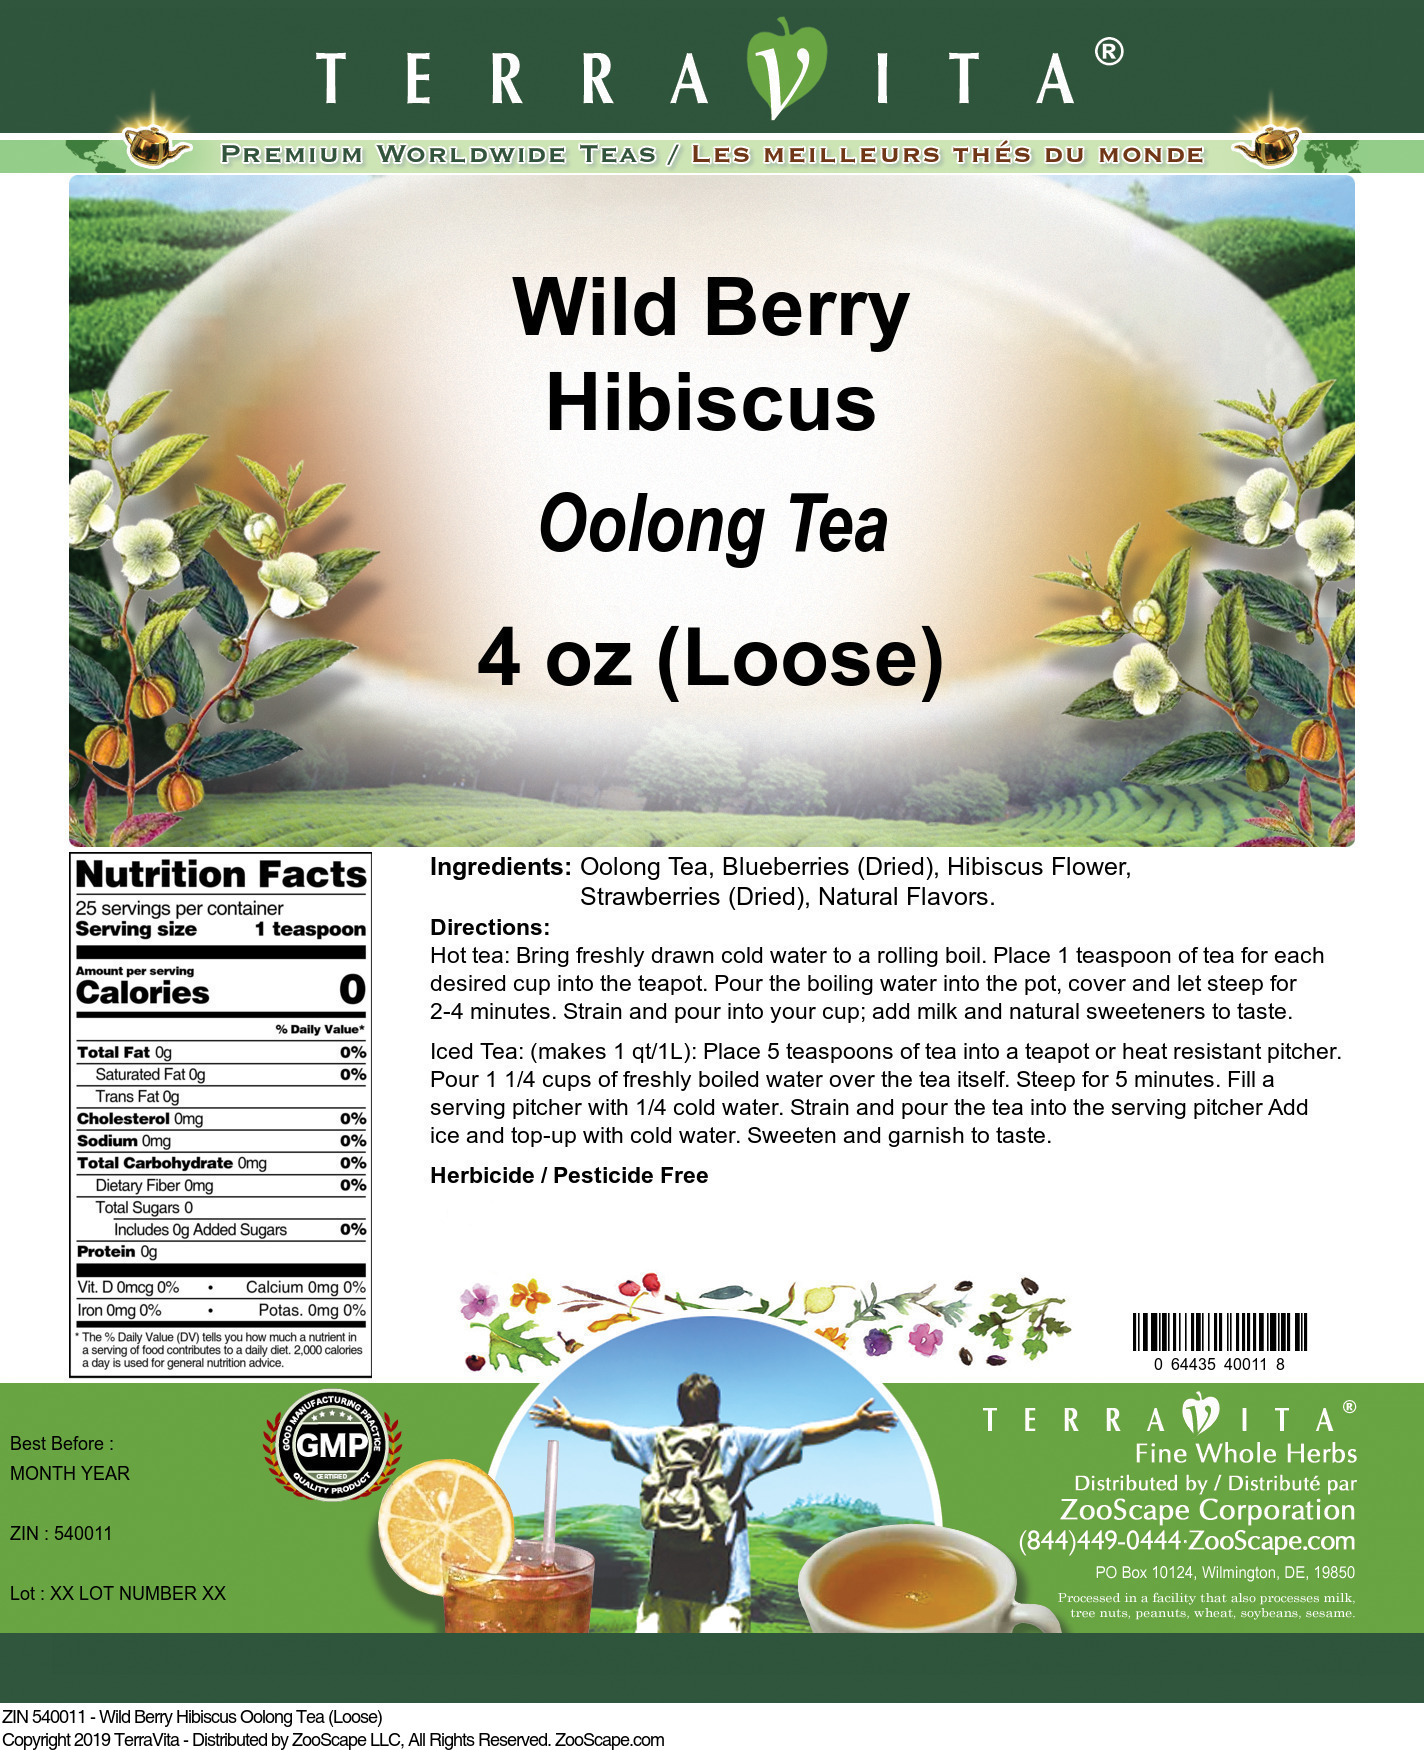 Wild Berry Hibiscus Oolong Tea (Loose) - Label